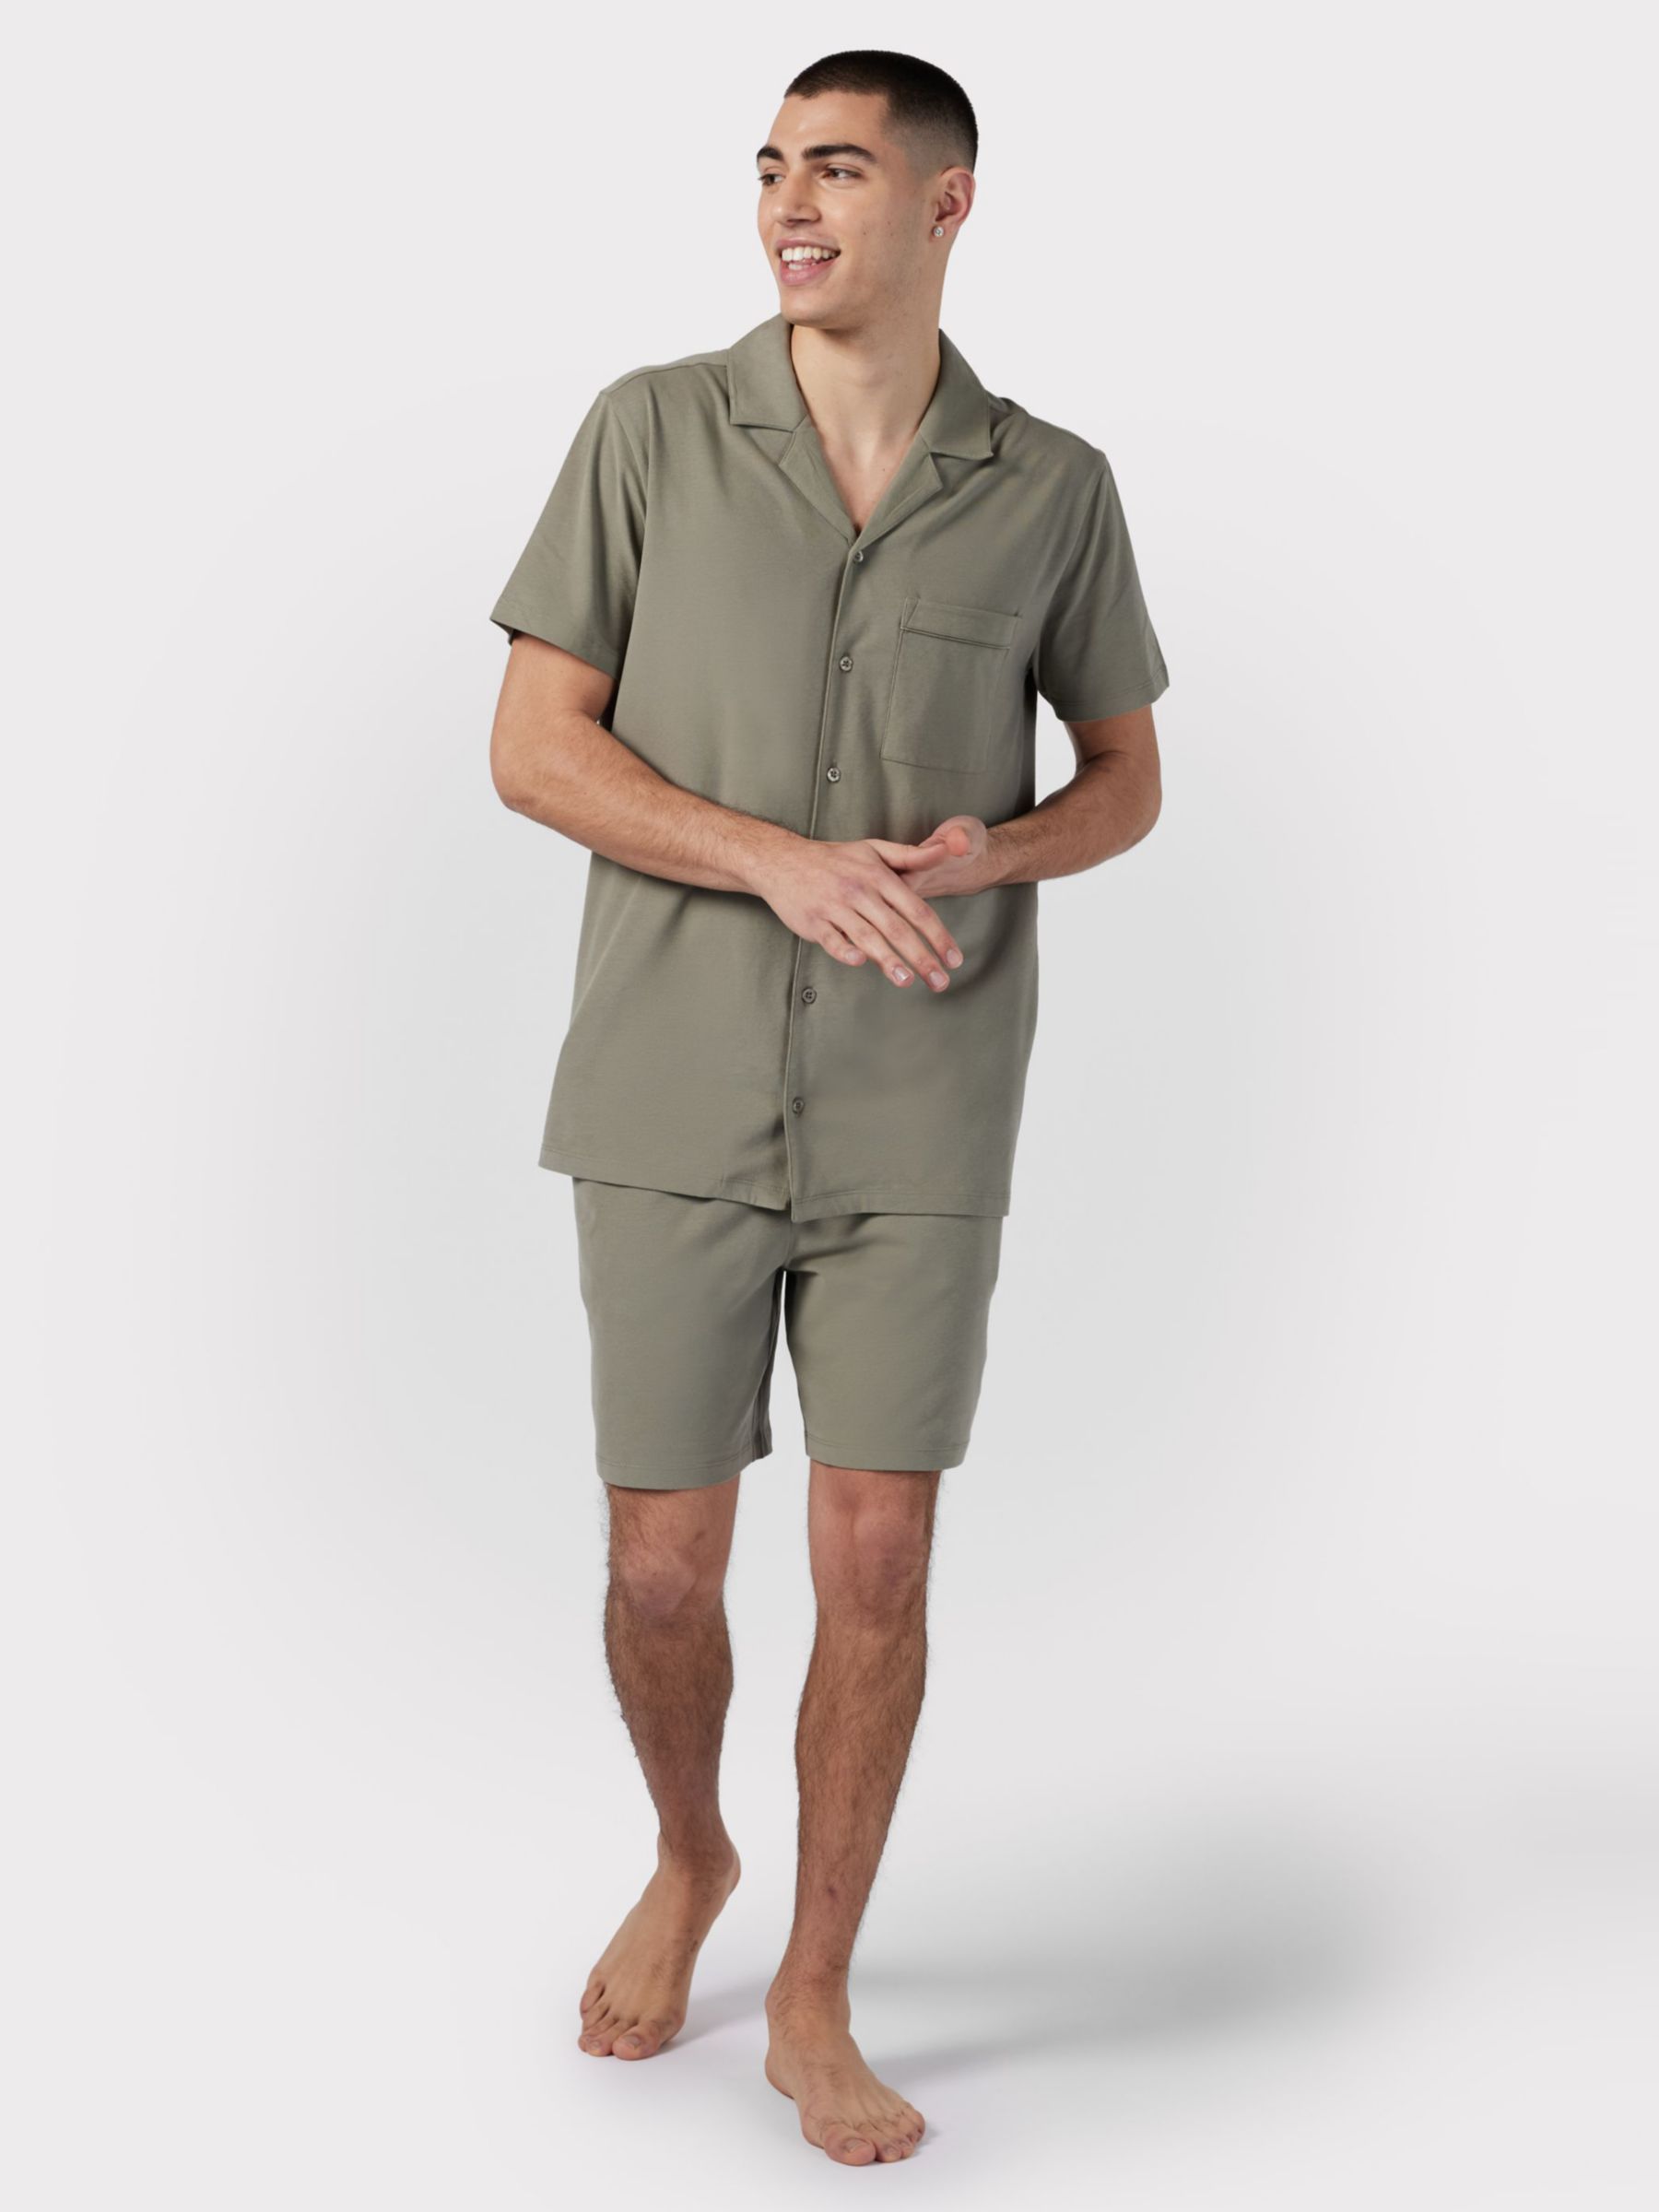 Chelsea Peers Organic Cotton Shorts Pyjama Set, Green, L